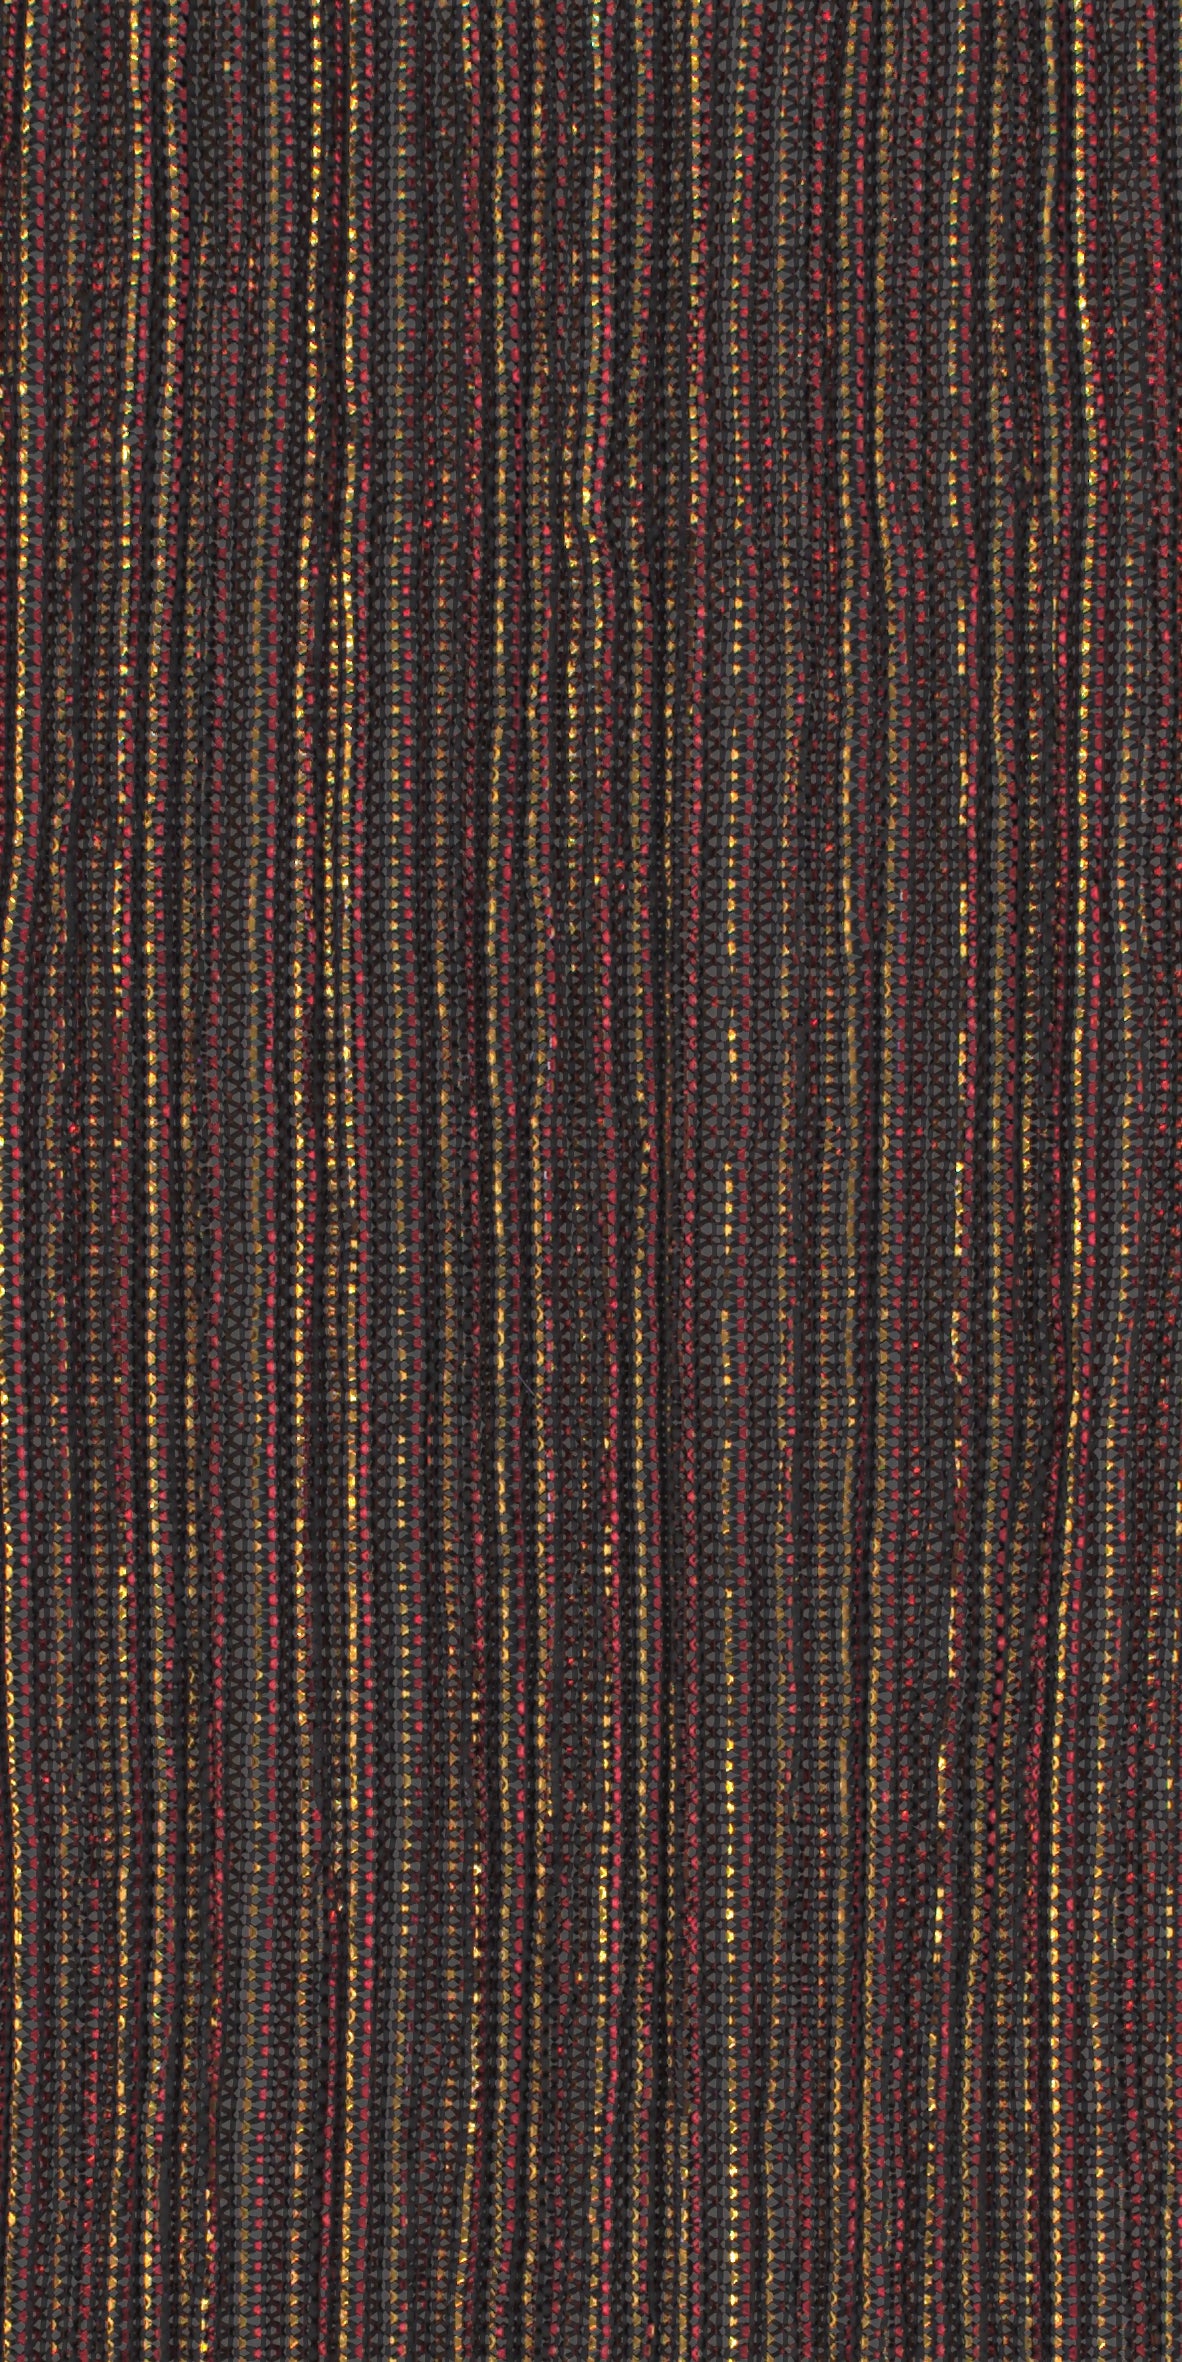 12006-24 Black Red Gold Metallic Pleat Plain Dyed Blend 126g/yd 56&quot; black blend gold knit metallic plain dyed pleat ppl new red Metallic, Pleat - knit fabric - woven fabric - fabric company - fabric wholesale - fabric b2b - fabric factory - high quality fabric - hong kong fabric - fabric hk - acetate fabric - cotton fabric - linen fabric - metallic fabric - nylon fabric - polyester fabric - spandex fabric - chun wing hing - cwh hk - fabric worldwide ship - 針織布 - 梳織布 - 布料公司- 布料批發 - 香港布料 - 秦榮興